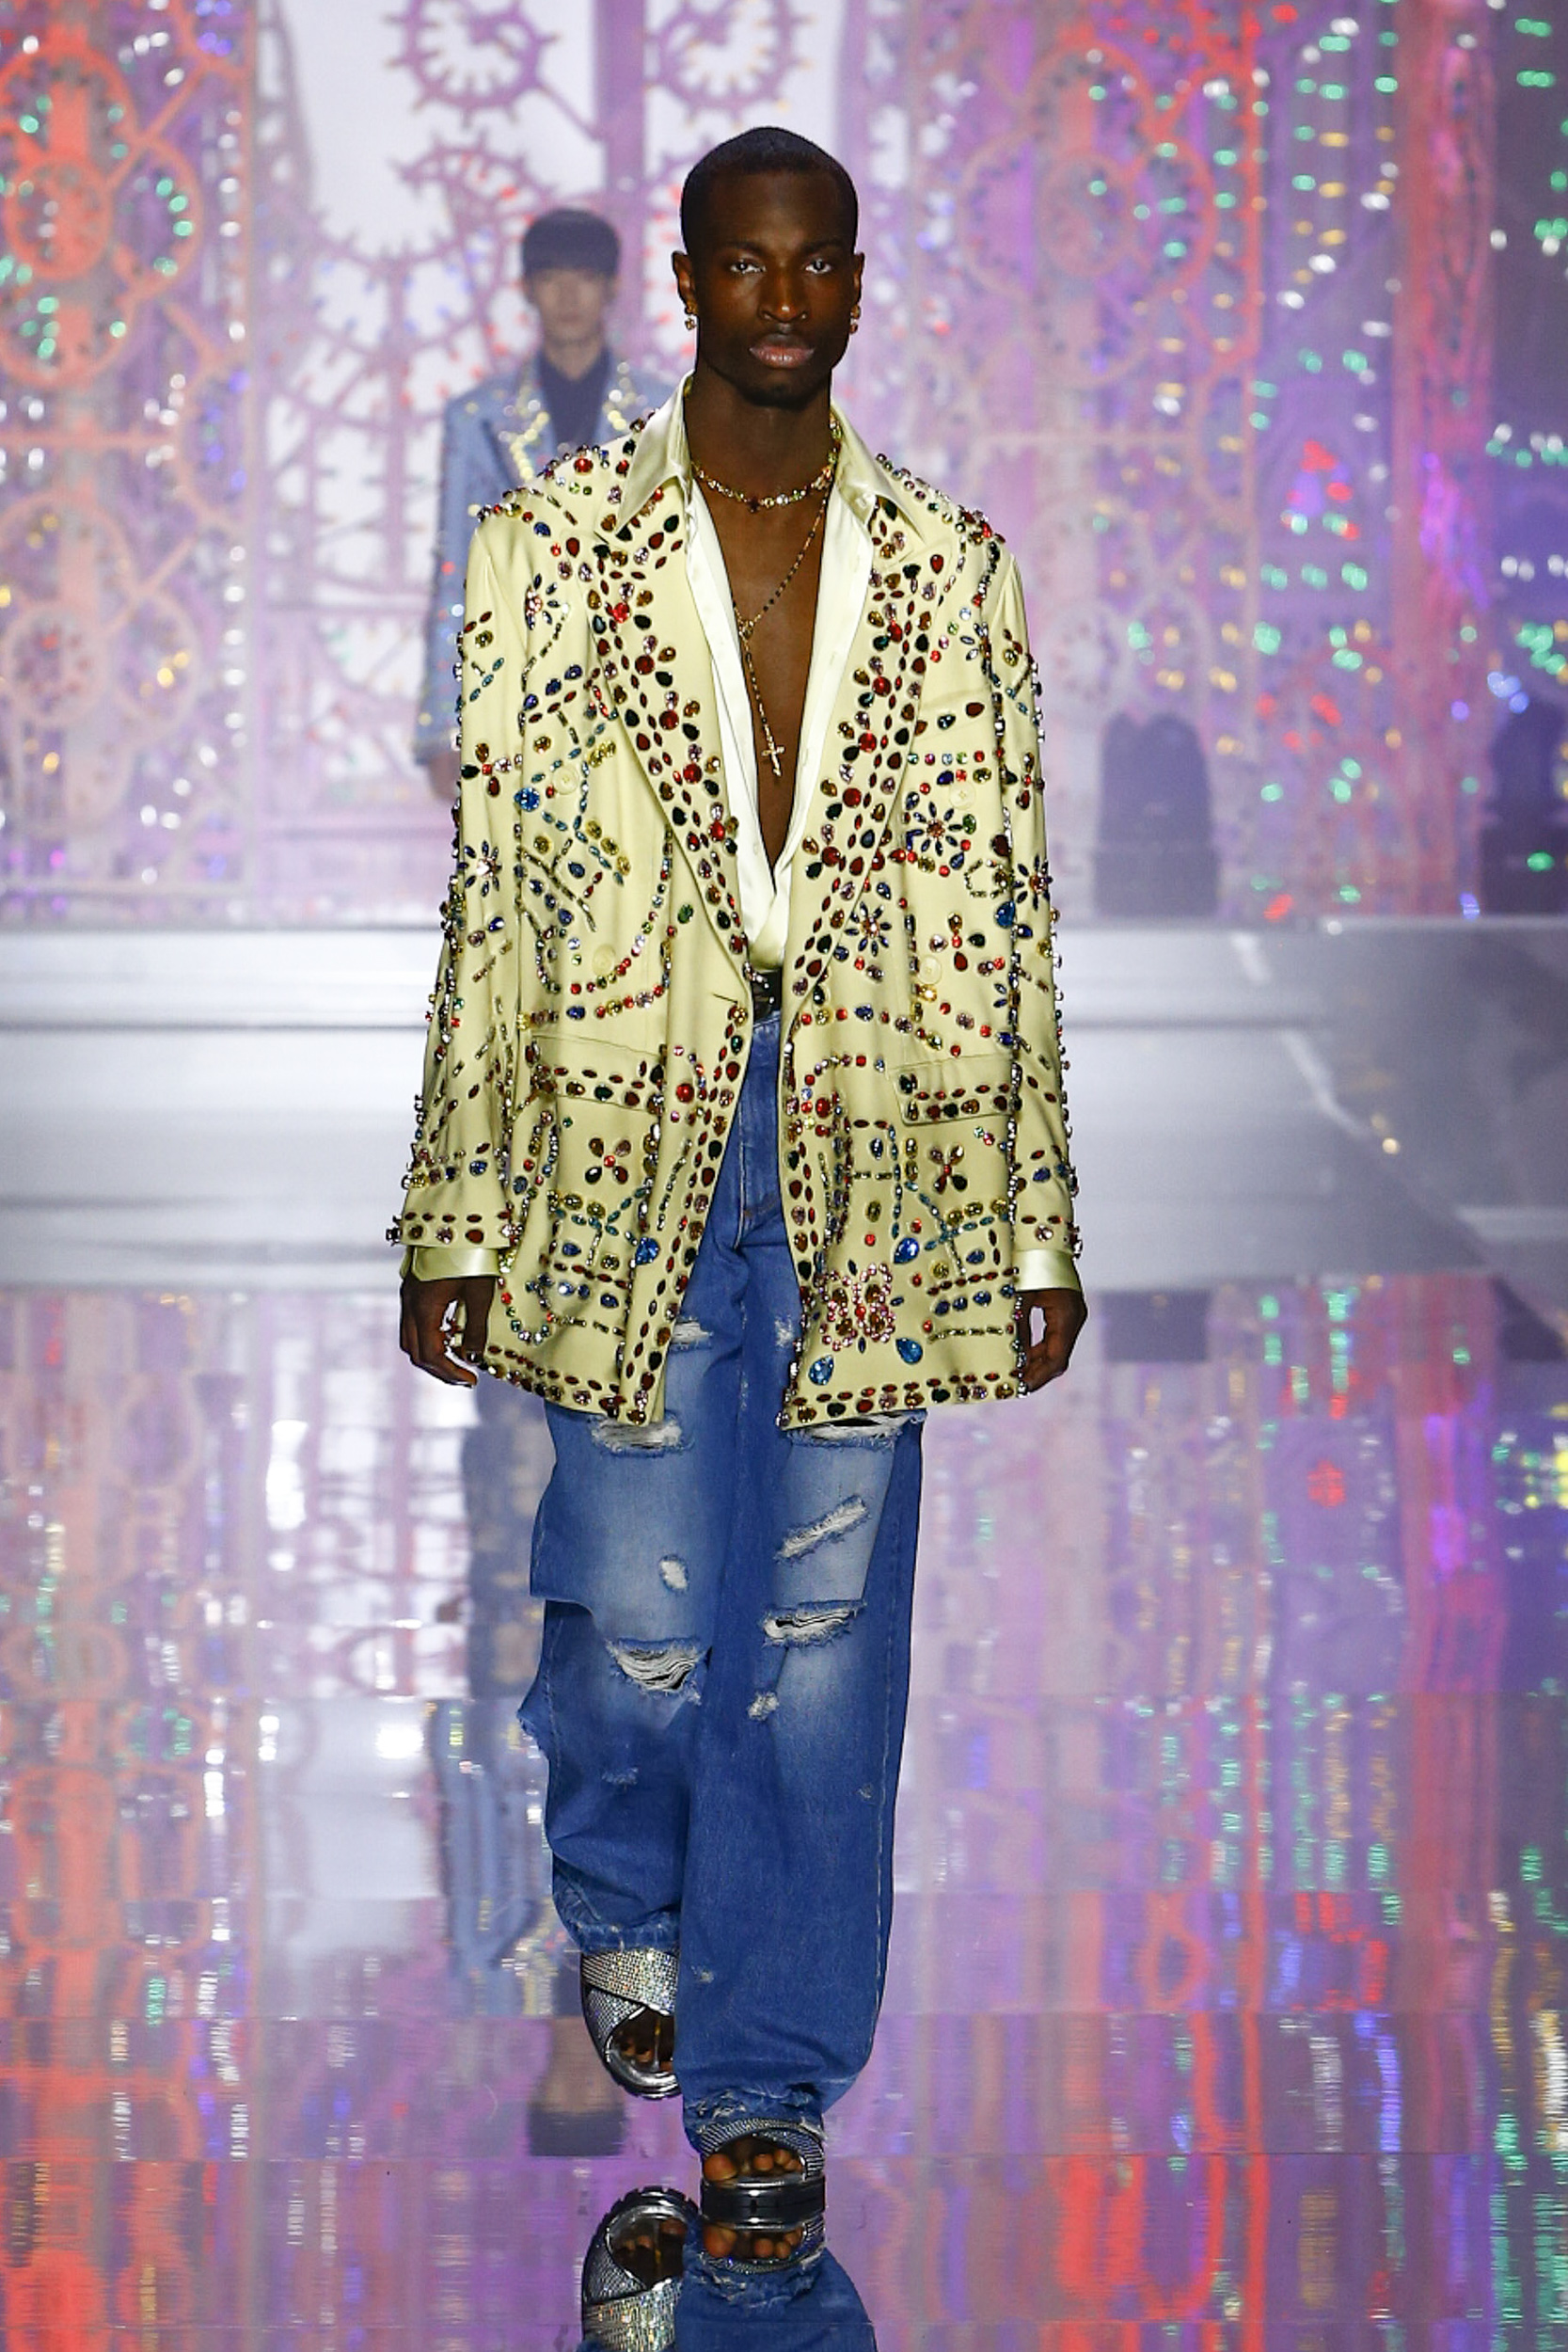 Dolce & Gabbana Men's Spring/Summer 2022 Collection Shines Bright | V Man